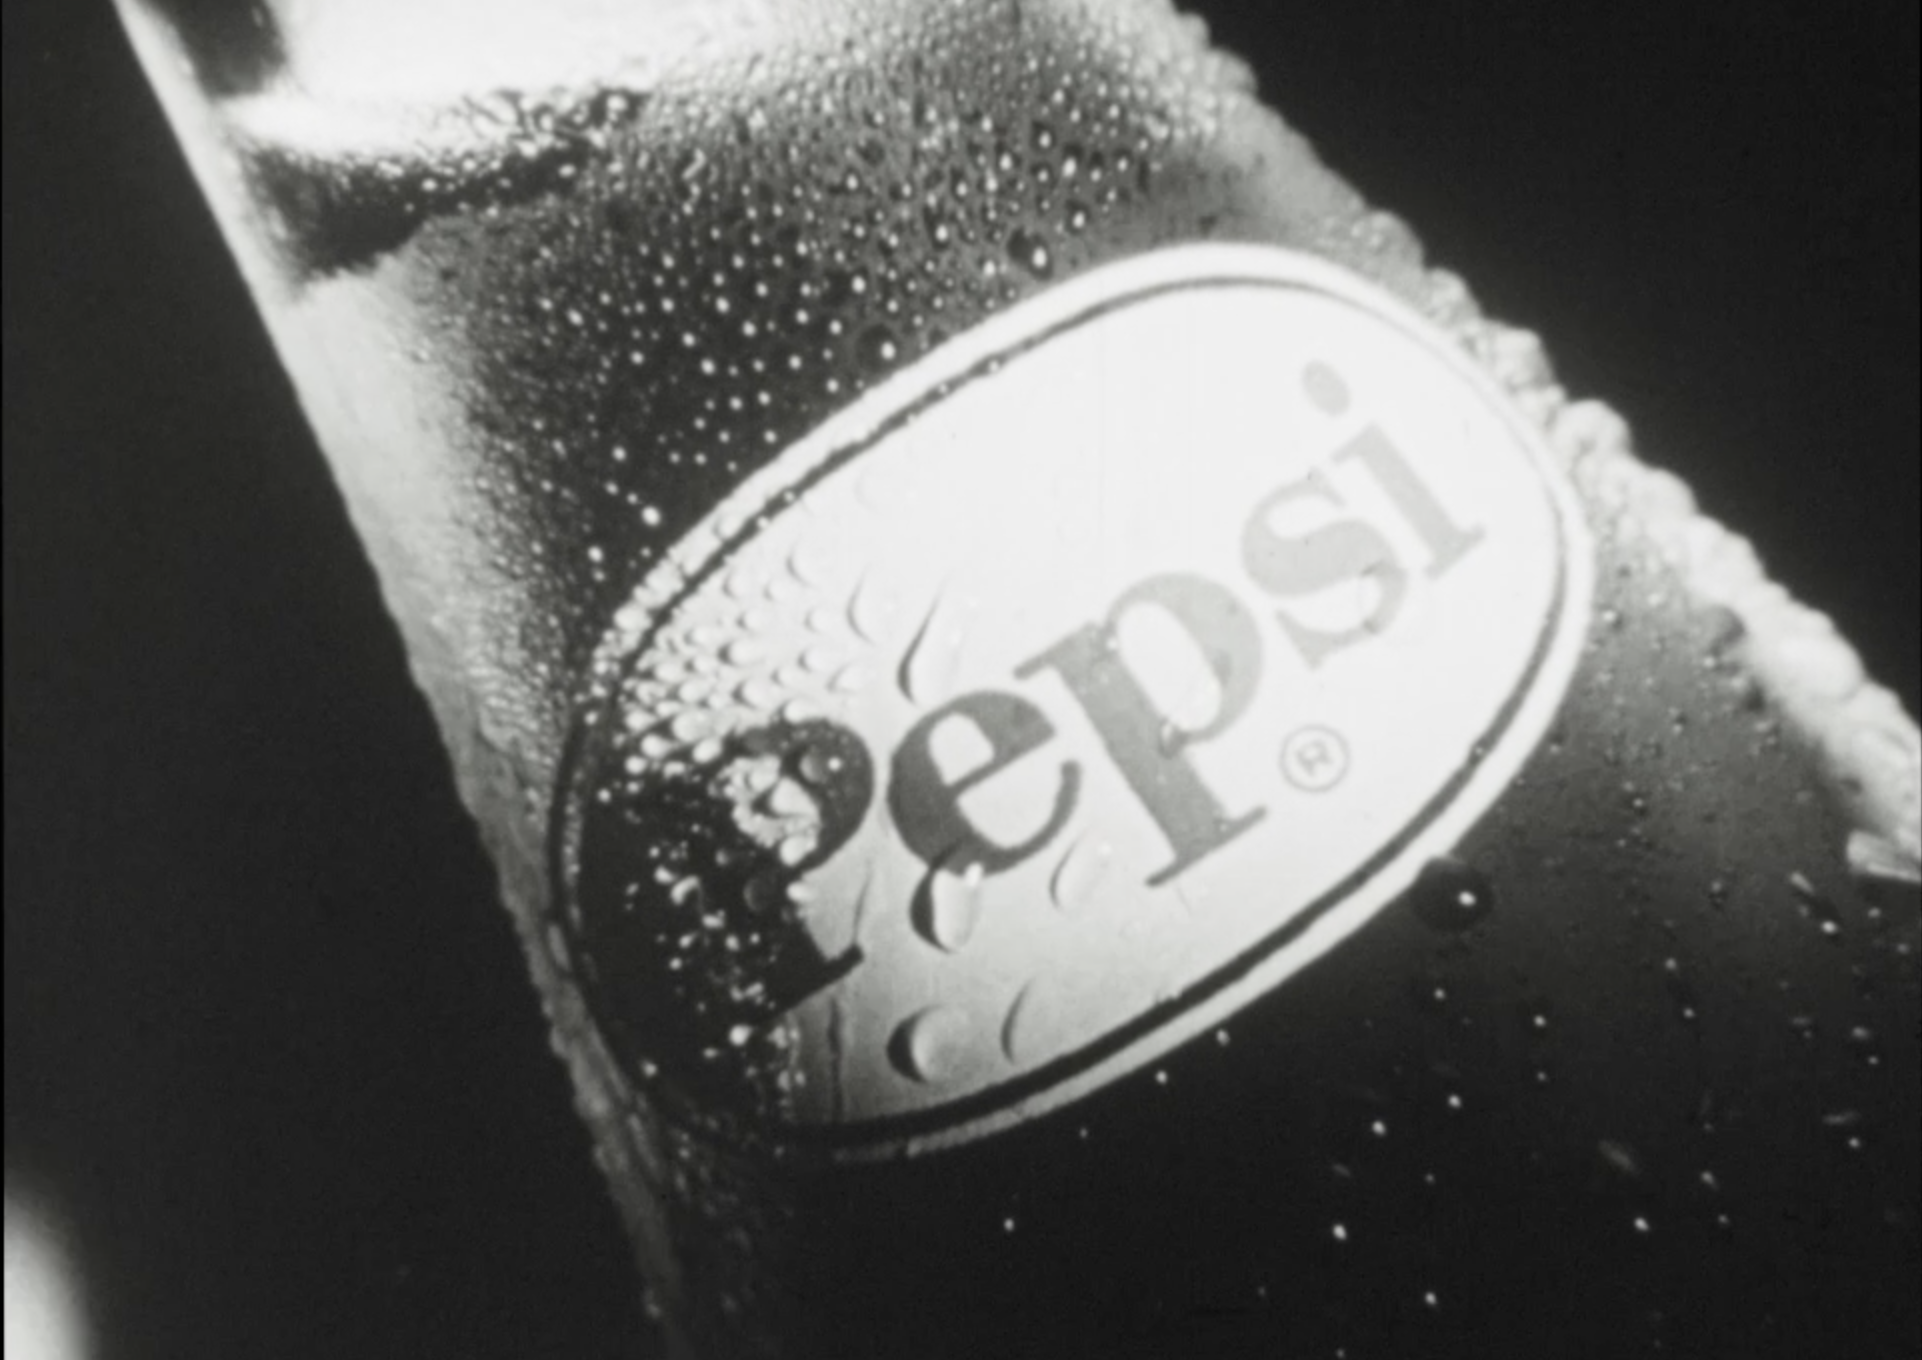 Still from Pepsi ad titled "Carton"